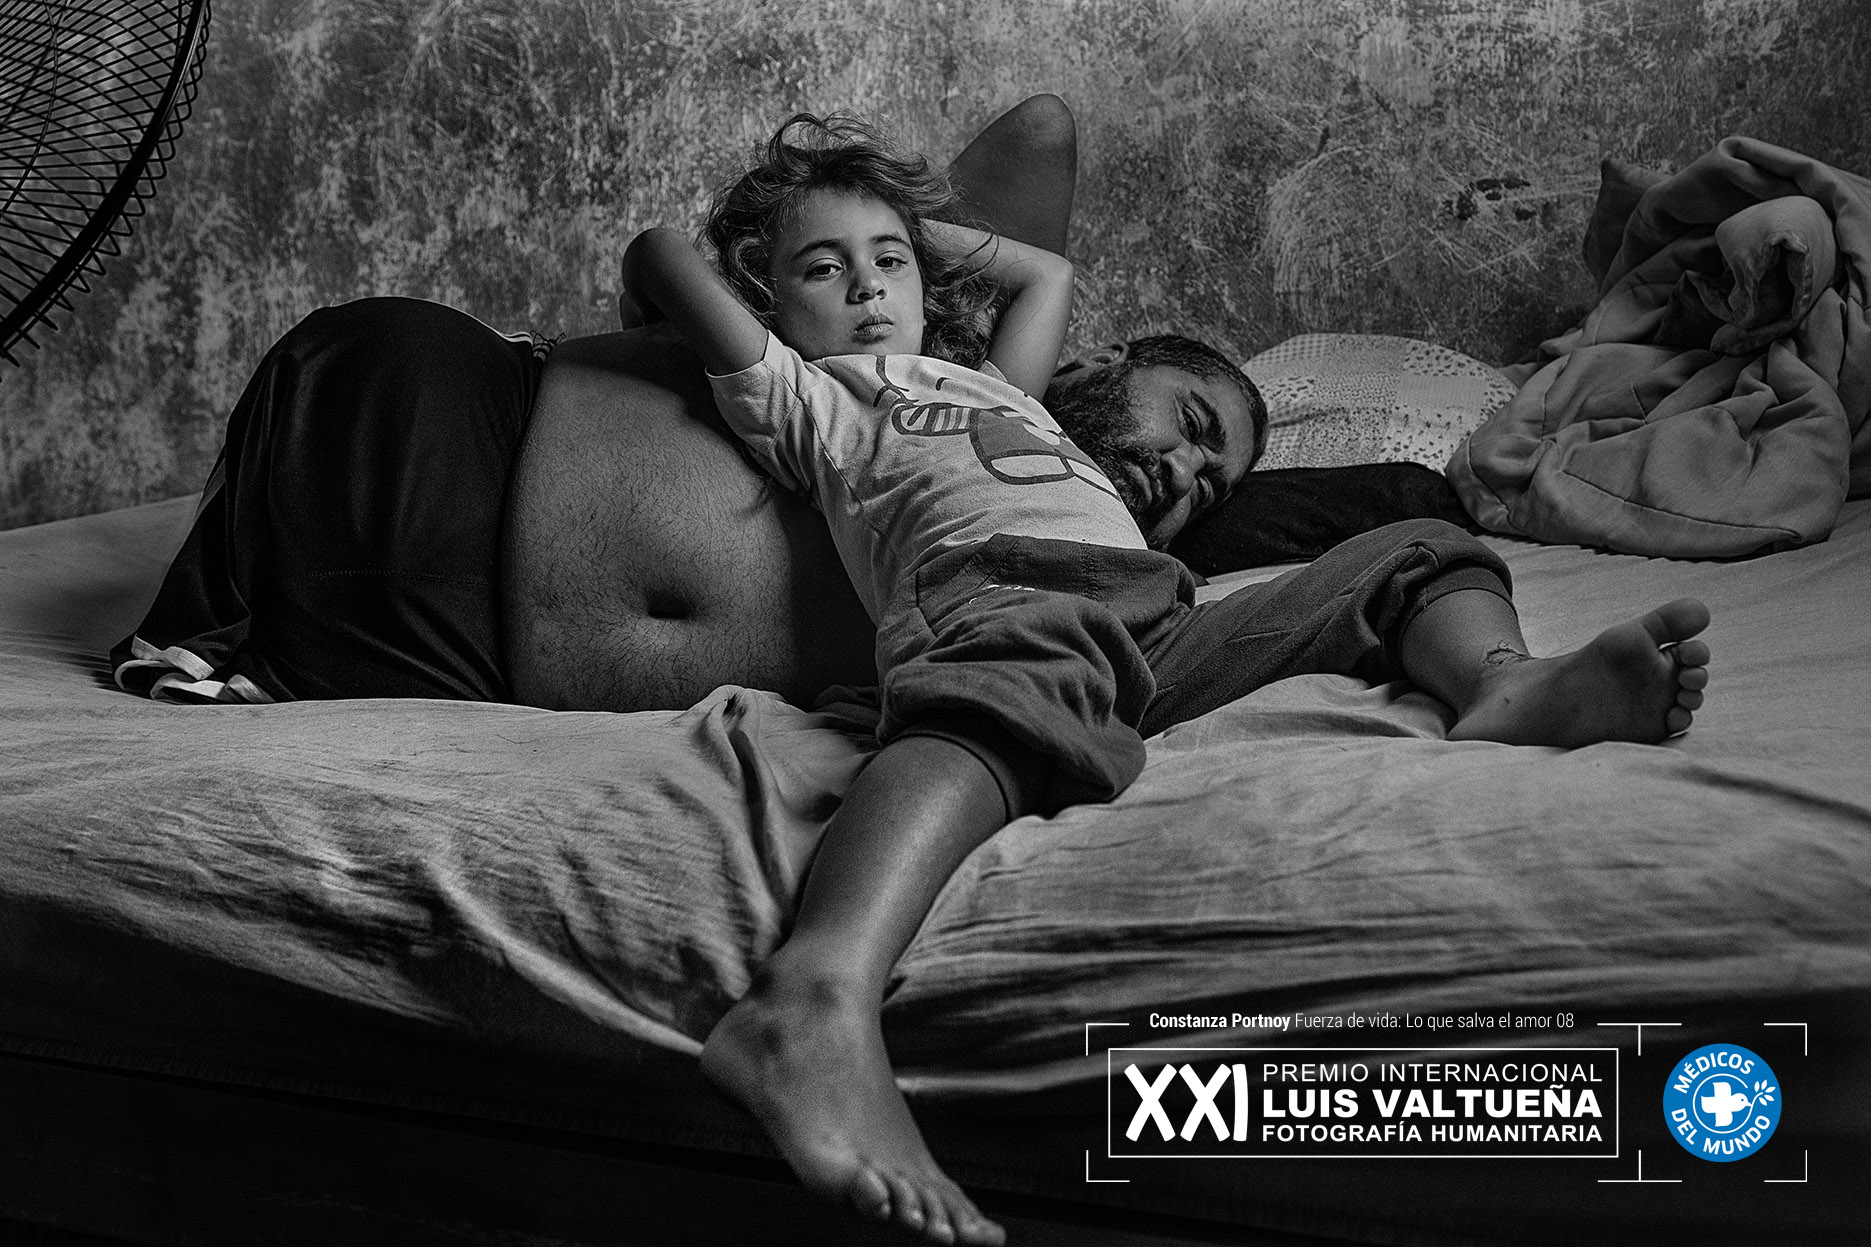 Luis Valtueña International Humanitarian Photography Award 2019 (Up to 6,000 Euros)